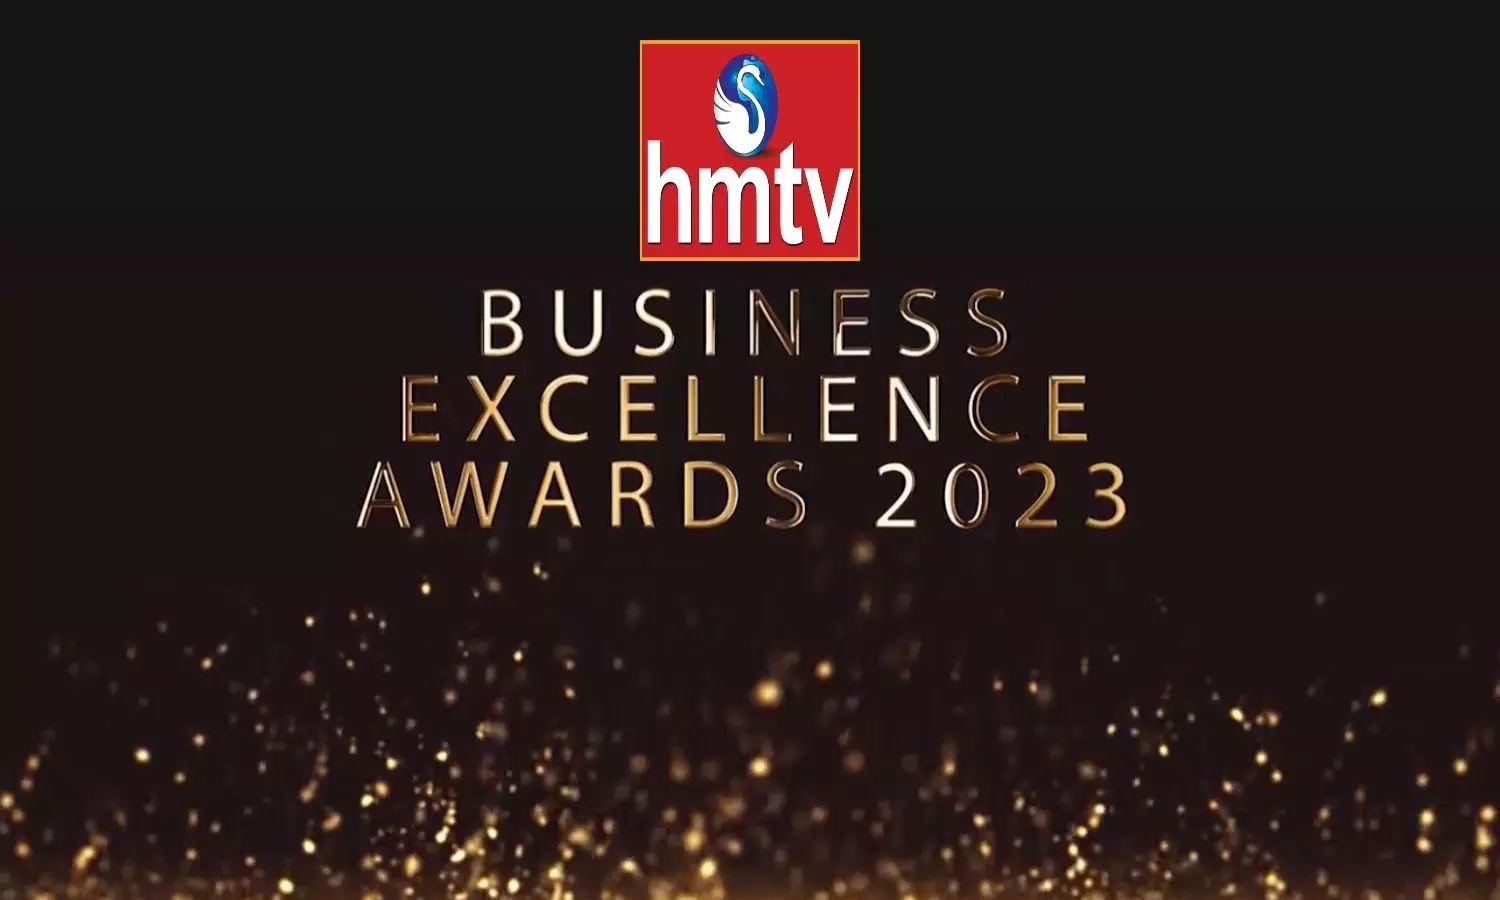 HMTV Business Excellence Awards 2023 Live